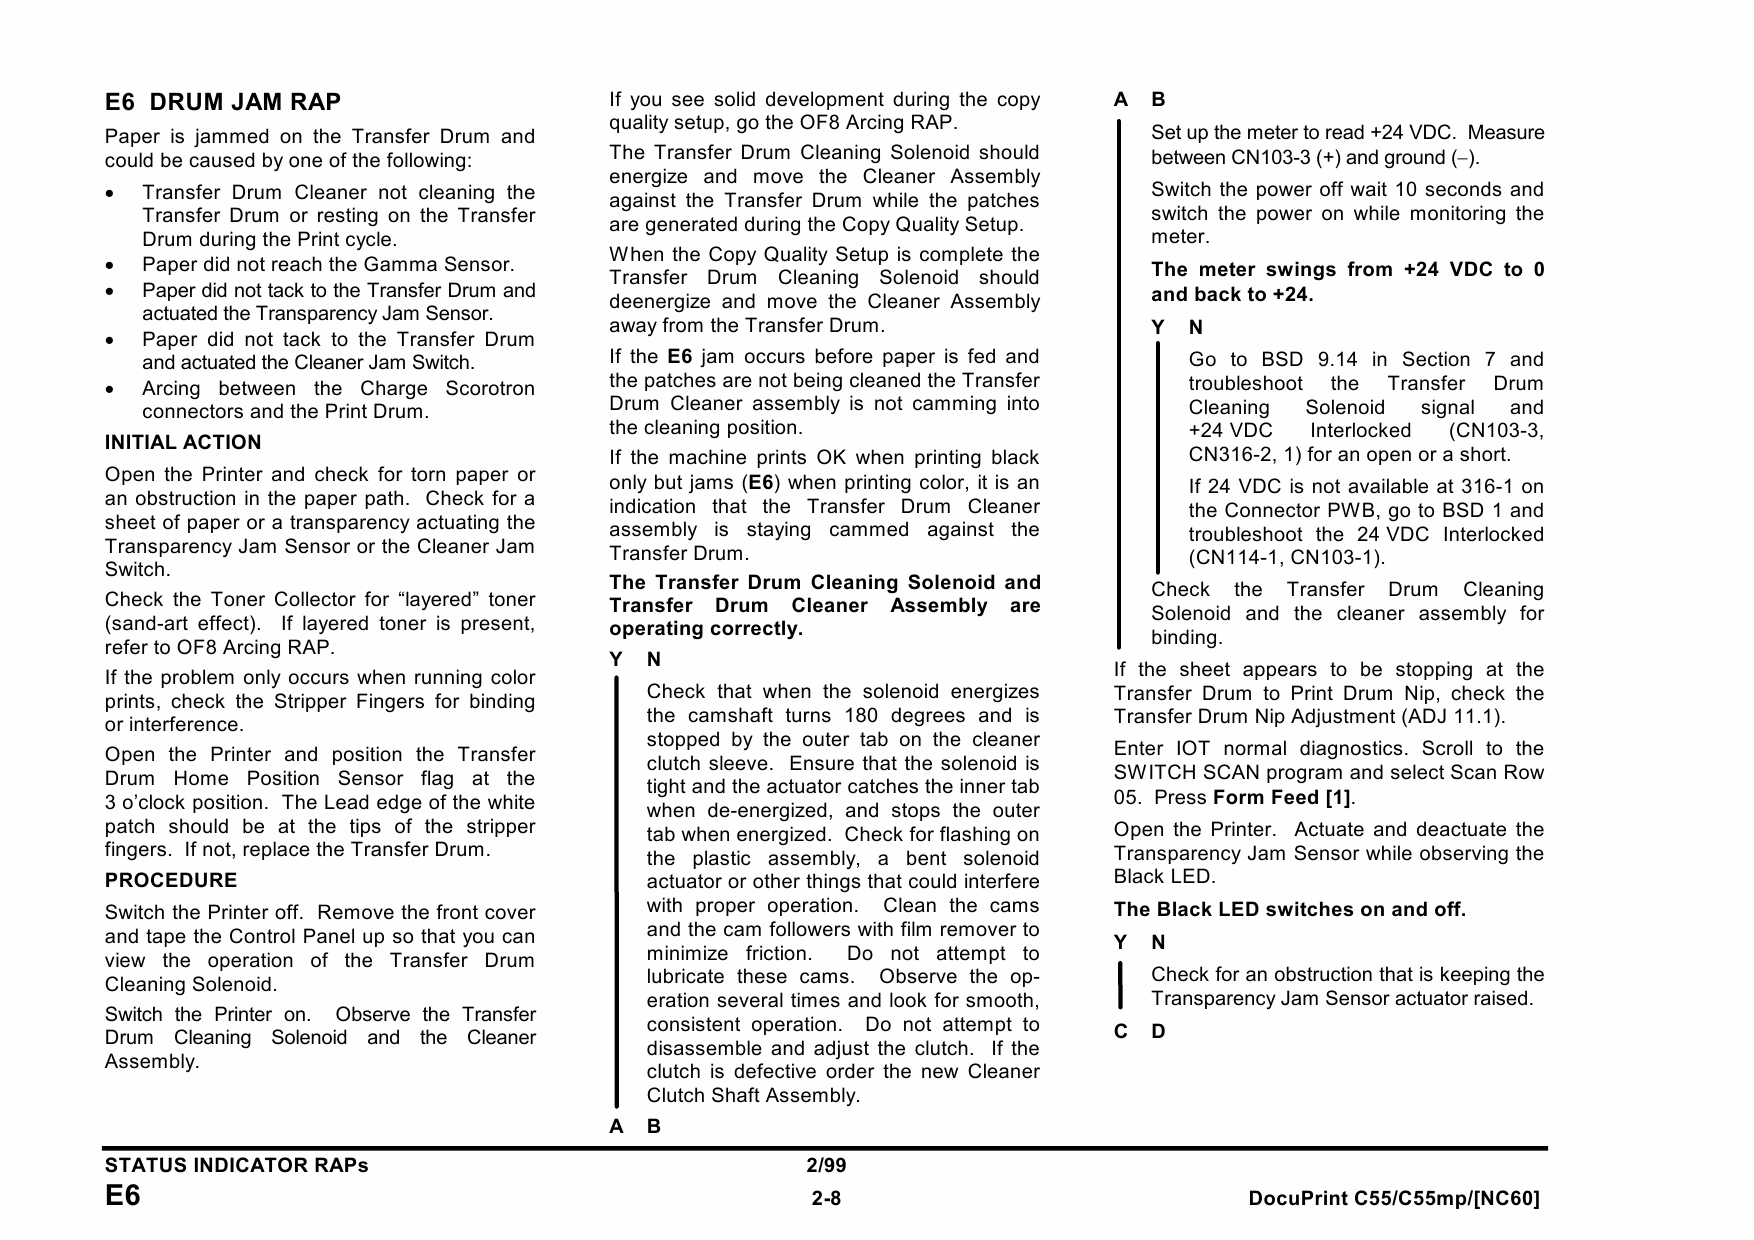 Xerox DocuPrint C55 C44mp NC60 Parts List and Service Manual-3